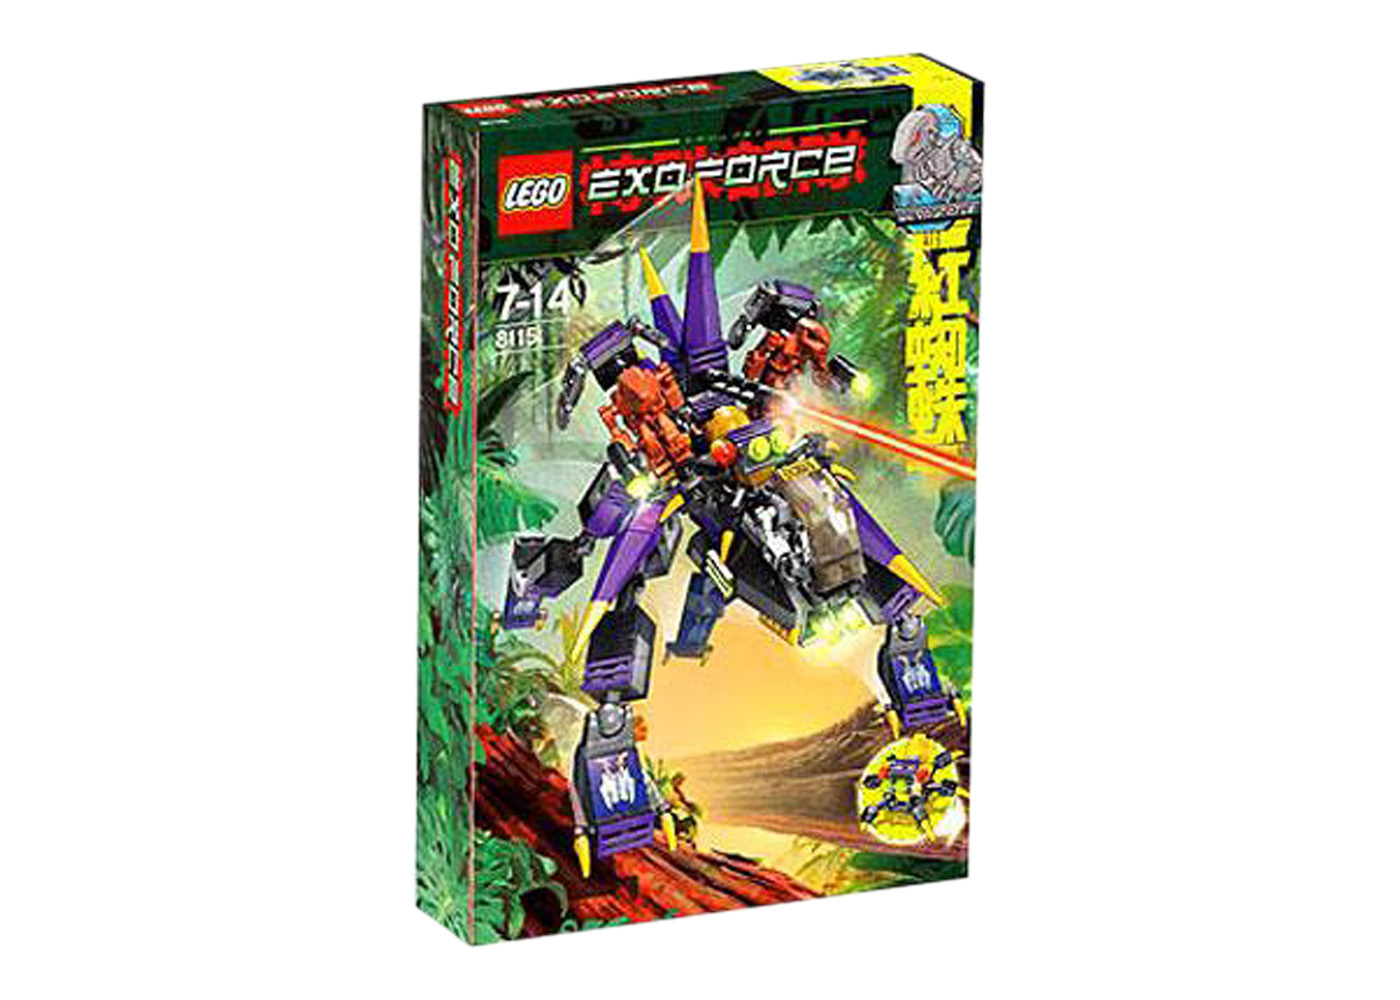 LEGO Exo Force Golden Guardian Set 7714 - US